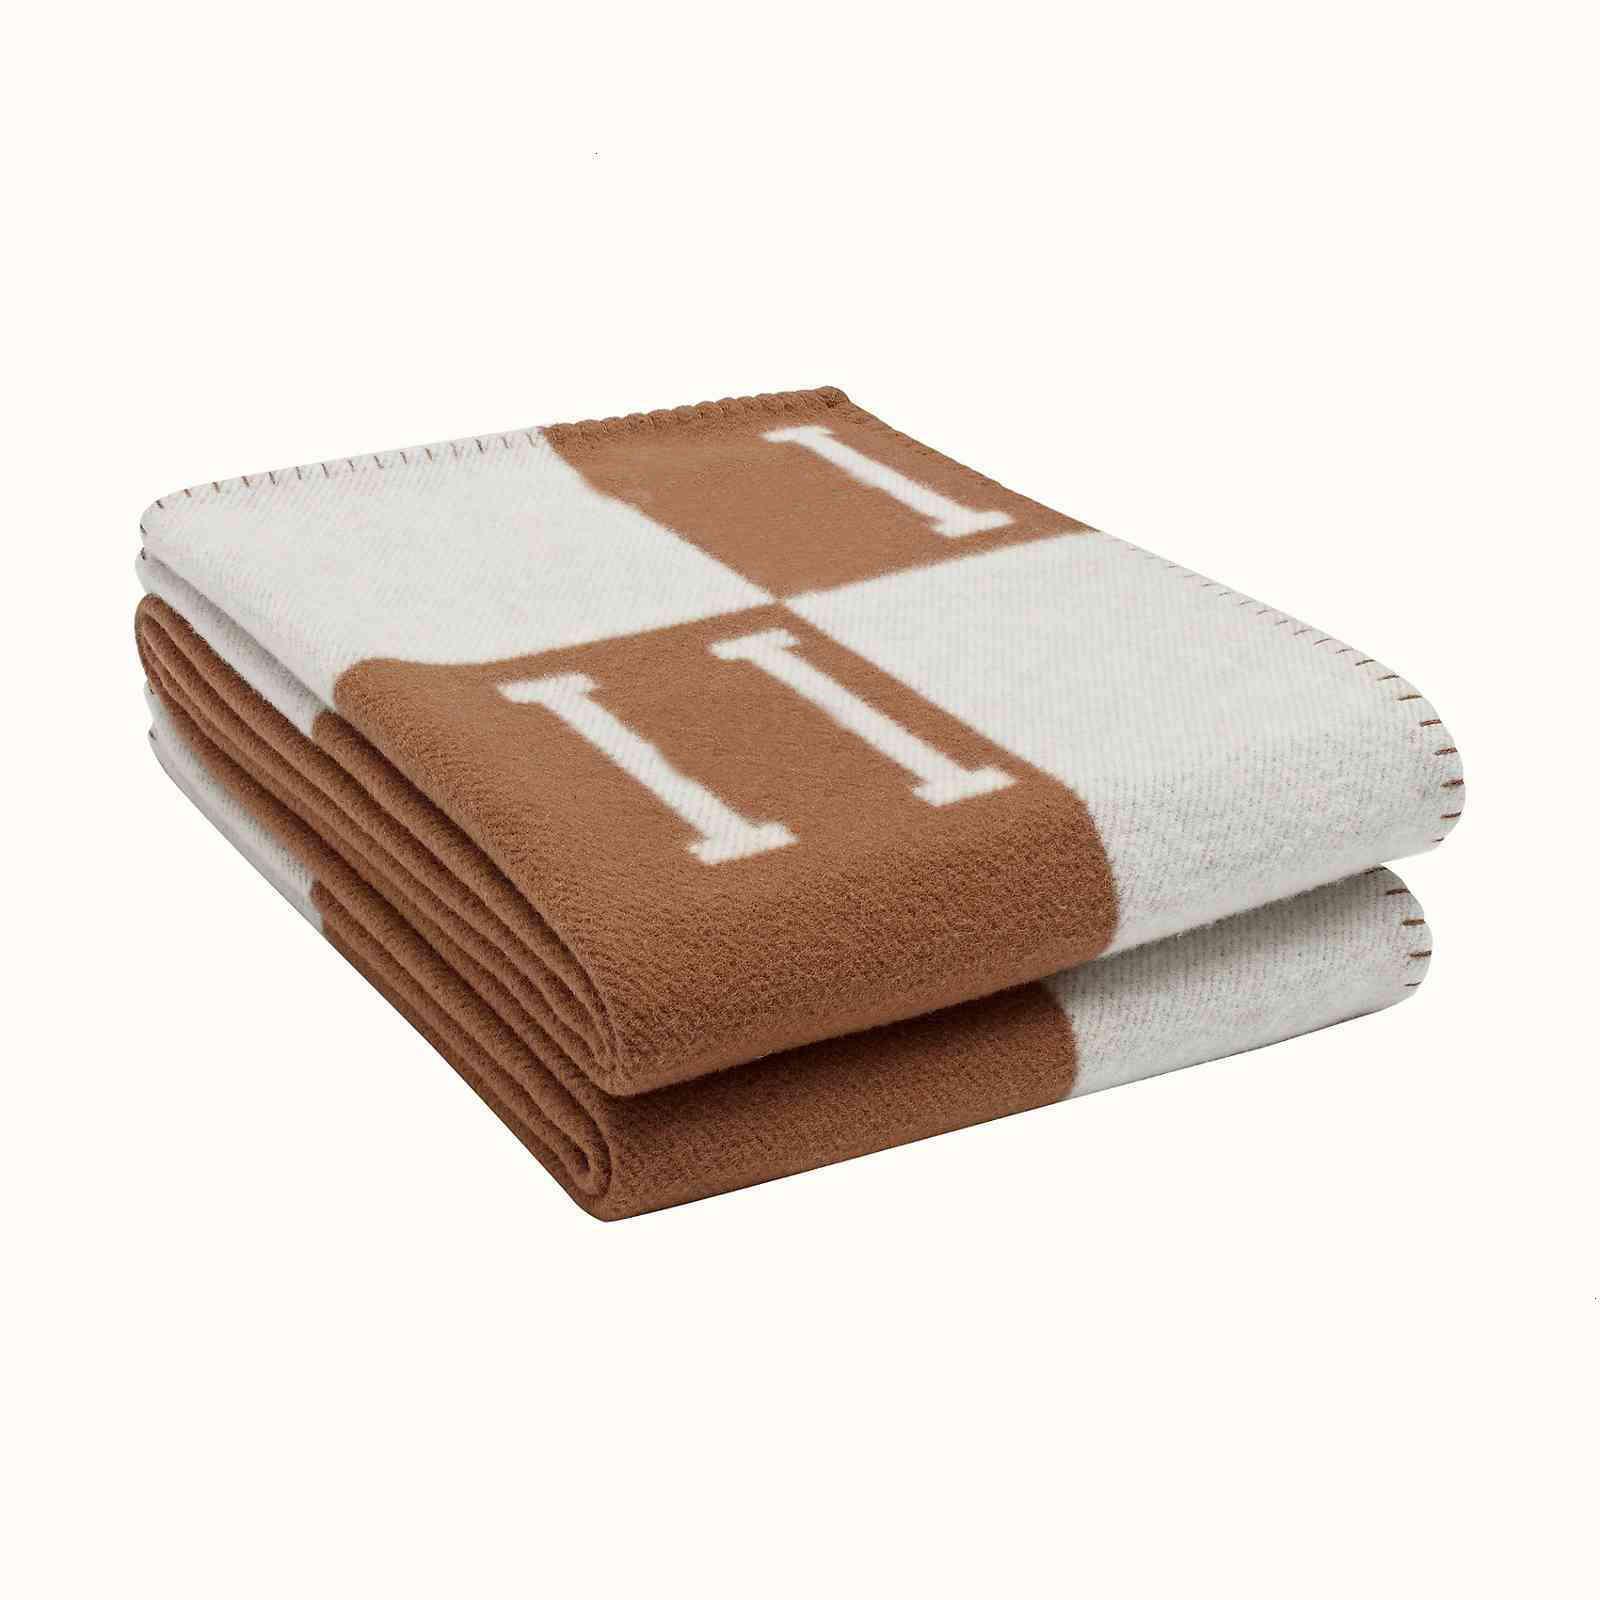 Letter Blanket Soft Wool Scarf Shawl Portable Warm Plaid Sofa Bed Fleece Spring Autumn Women Throw Blankets